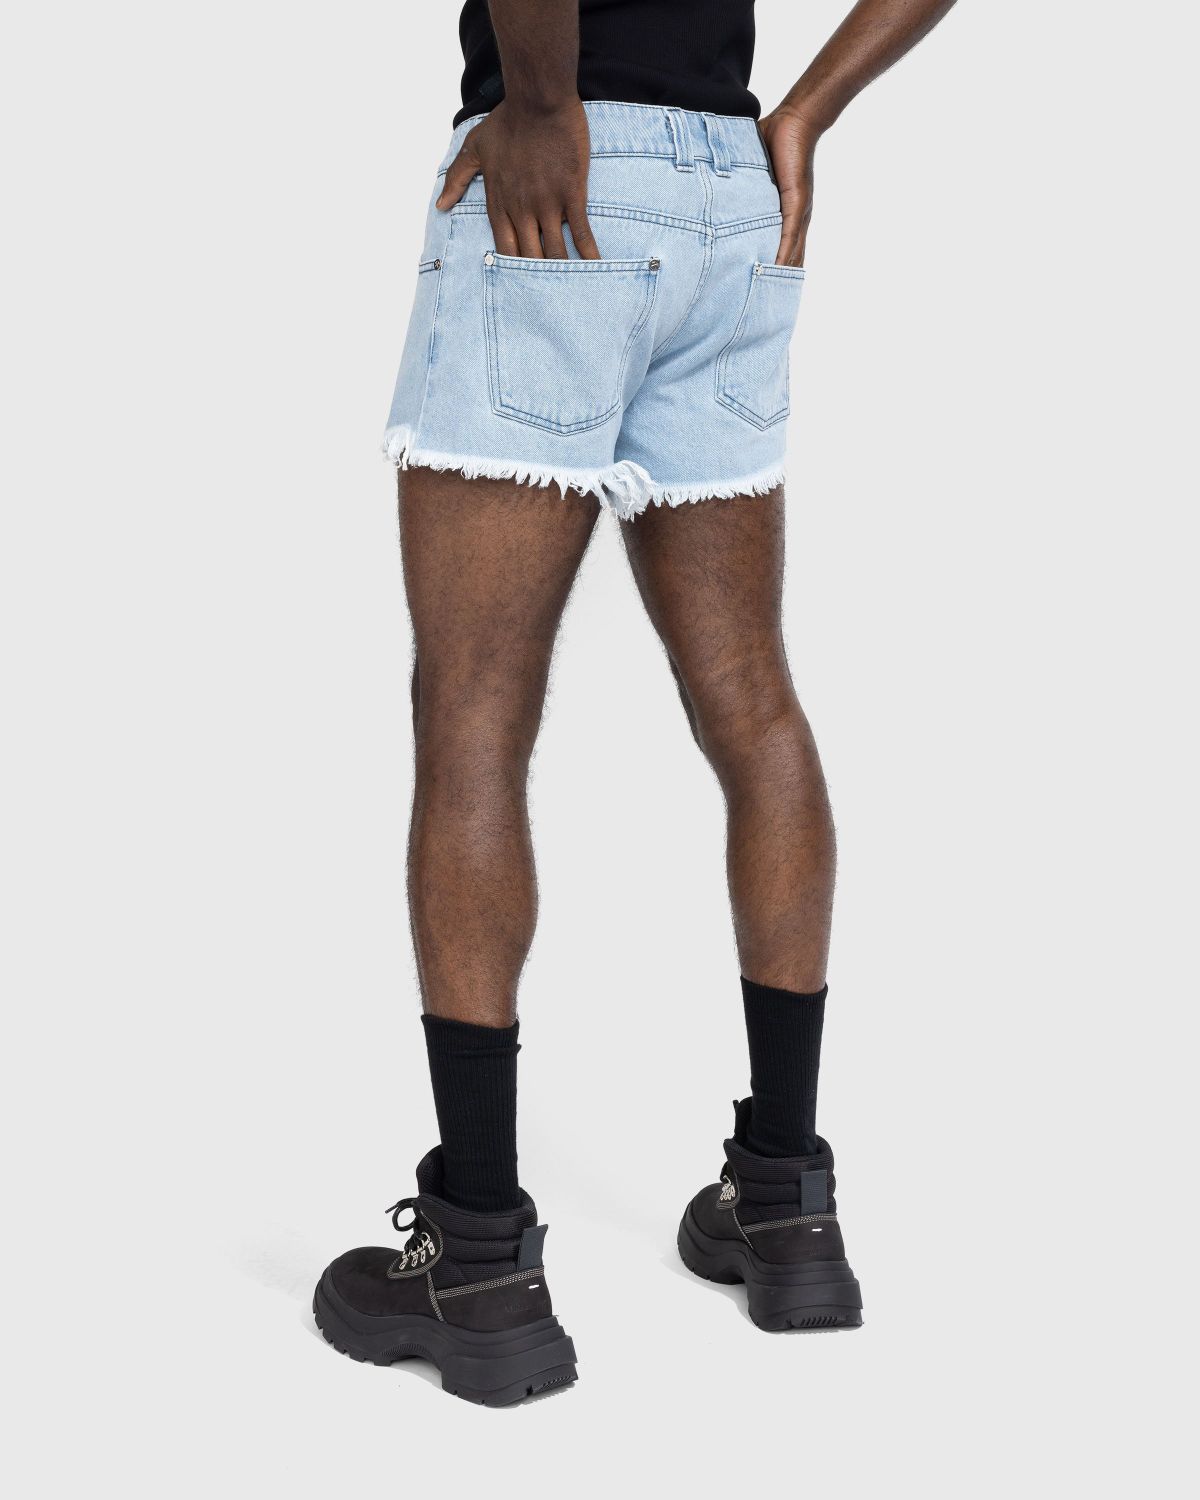 GmbH – Rim Denim Shorts Light Indigo Blue - Shorts - Blue - Image 3